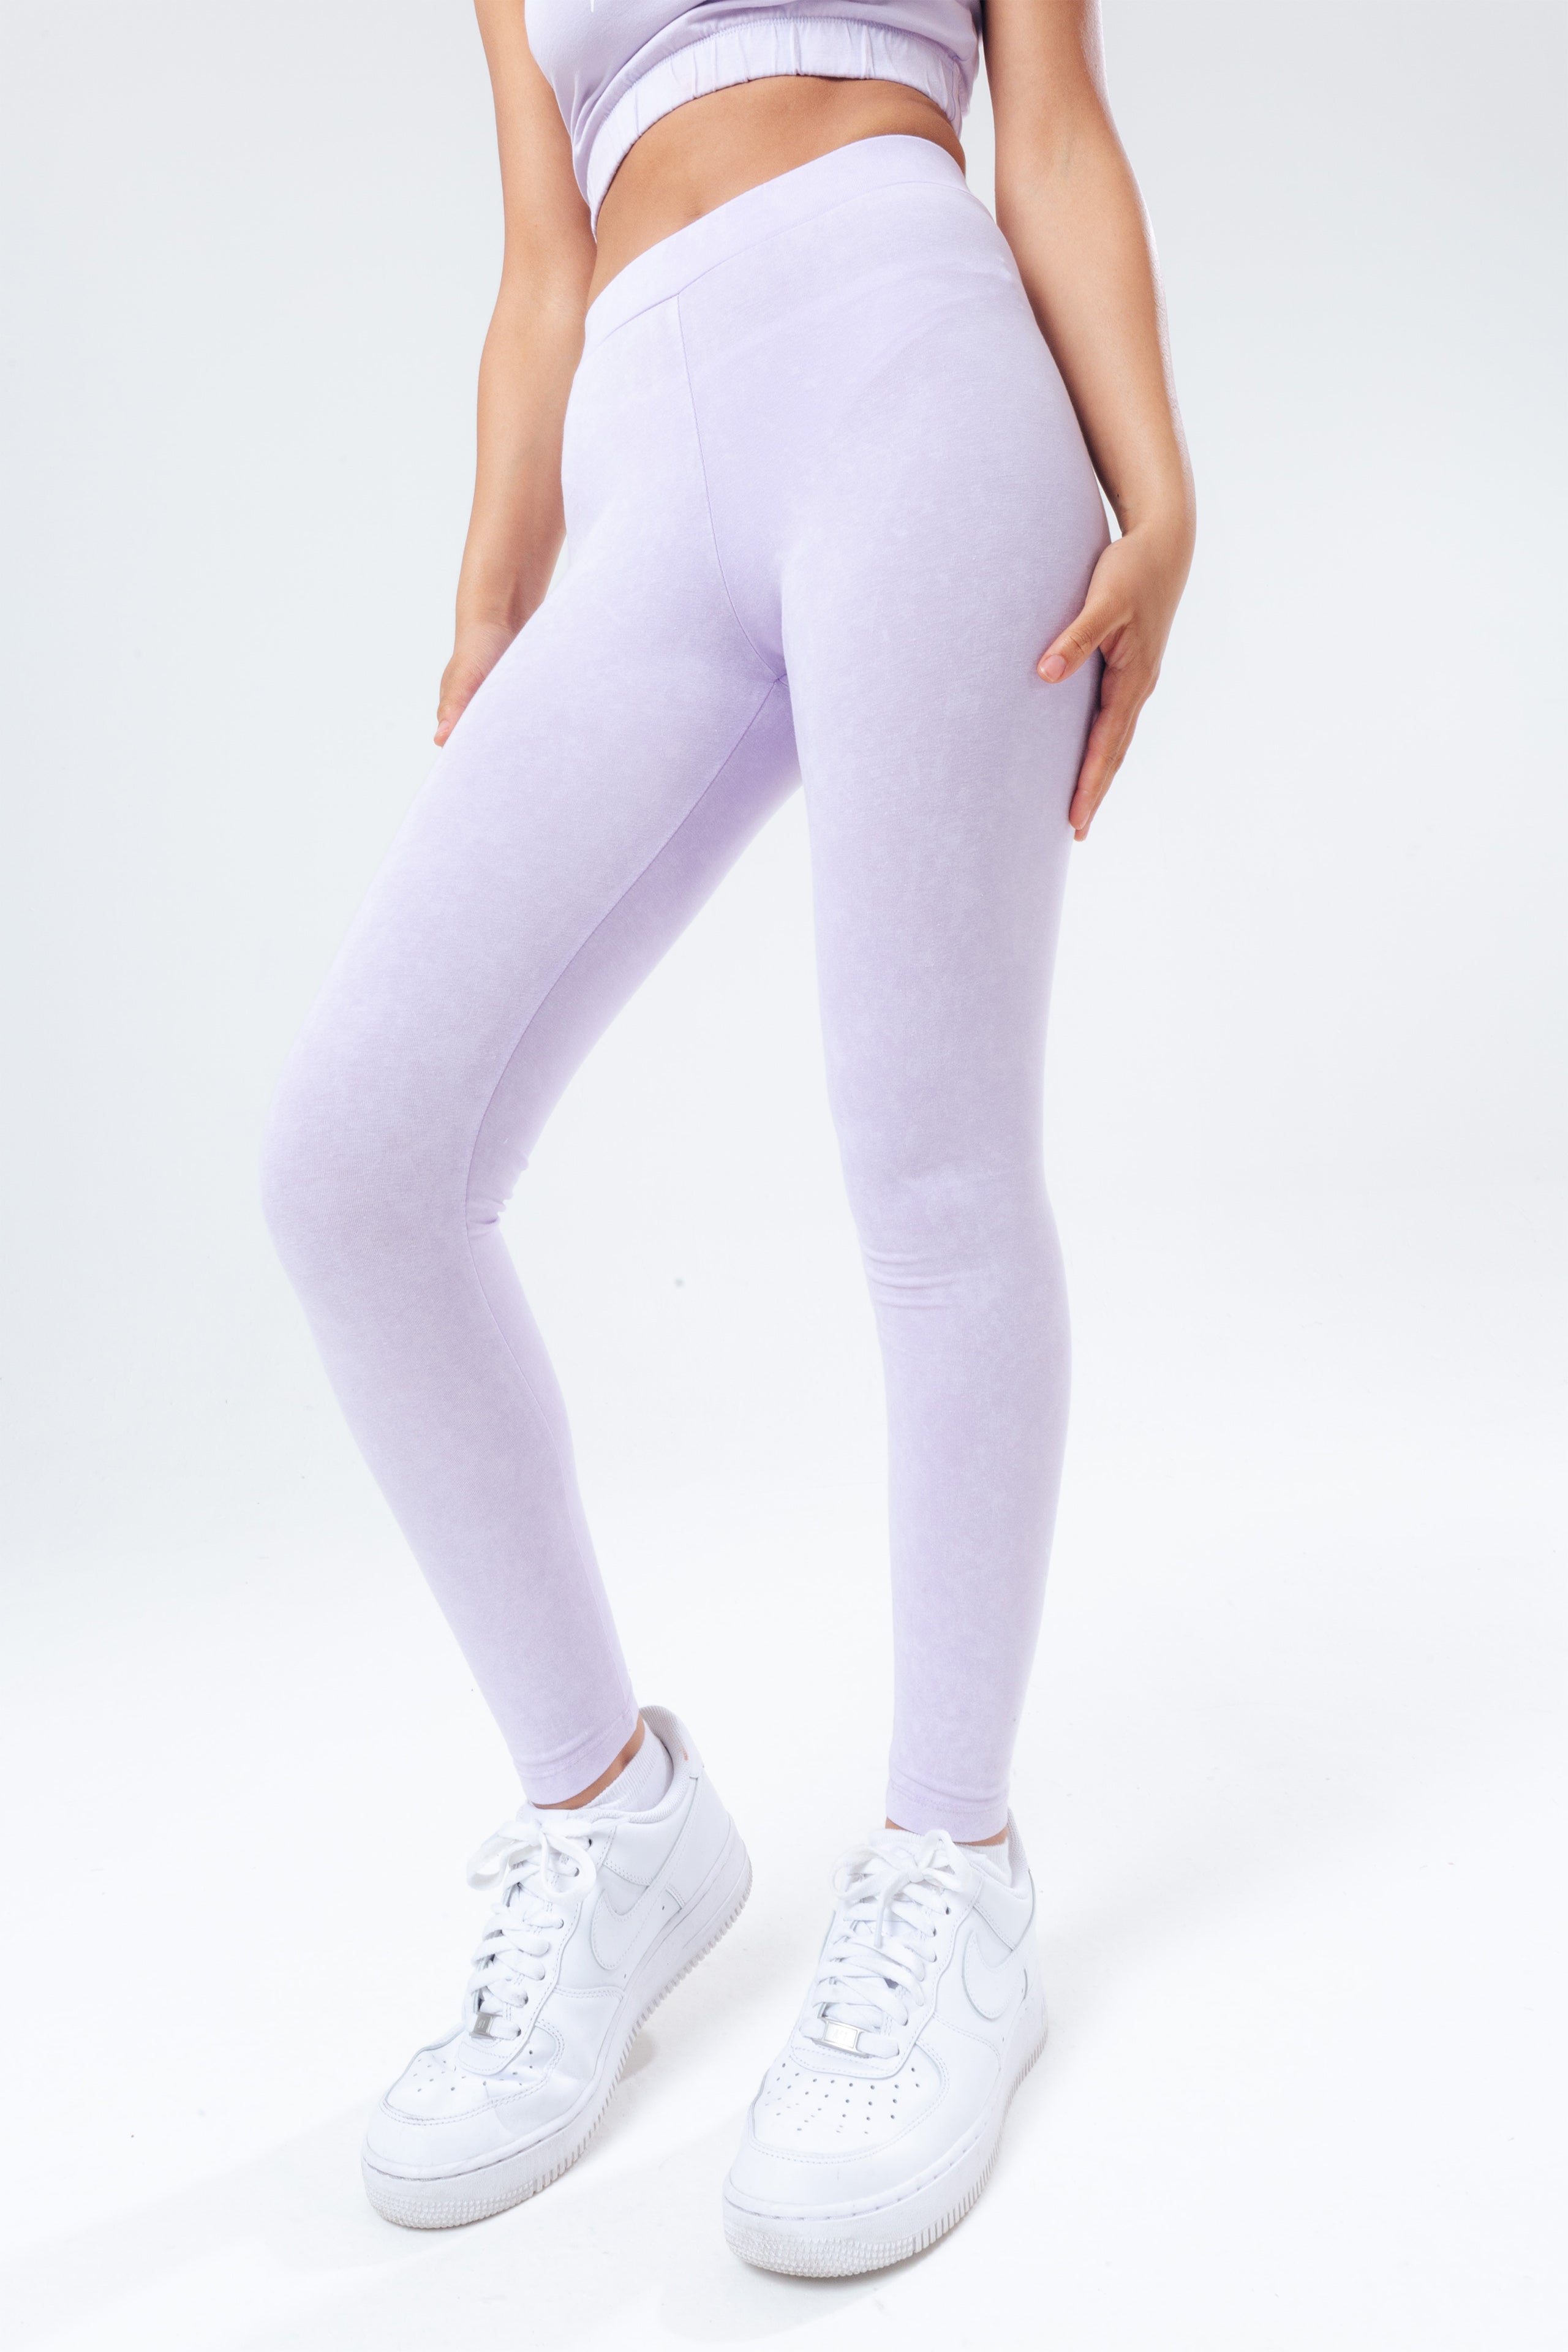 hype lilac vintage women’s leggings